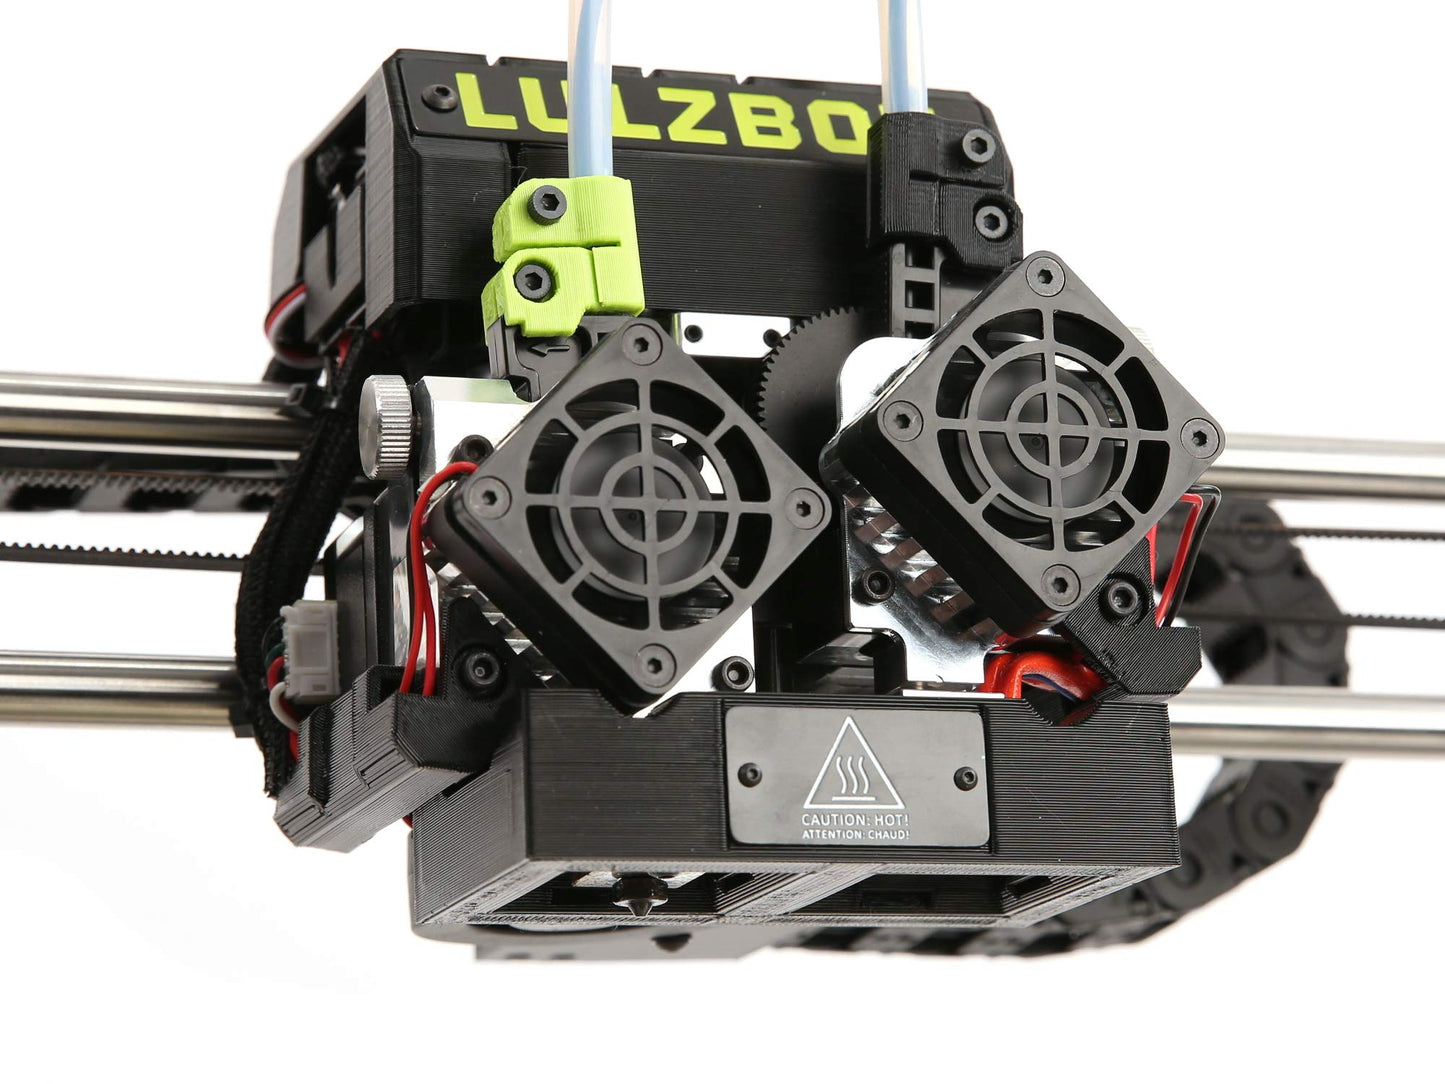 LulzBot TAZ Pro 3D Printer - KT-PR0050NA